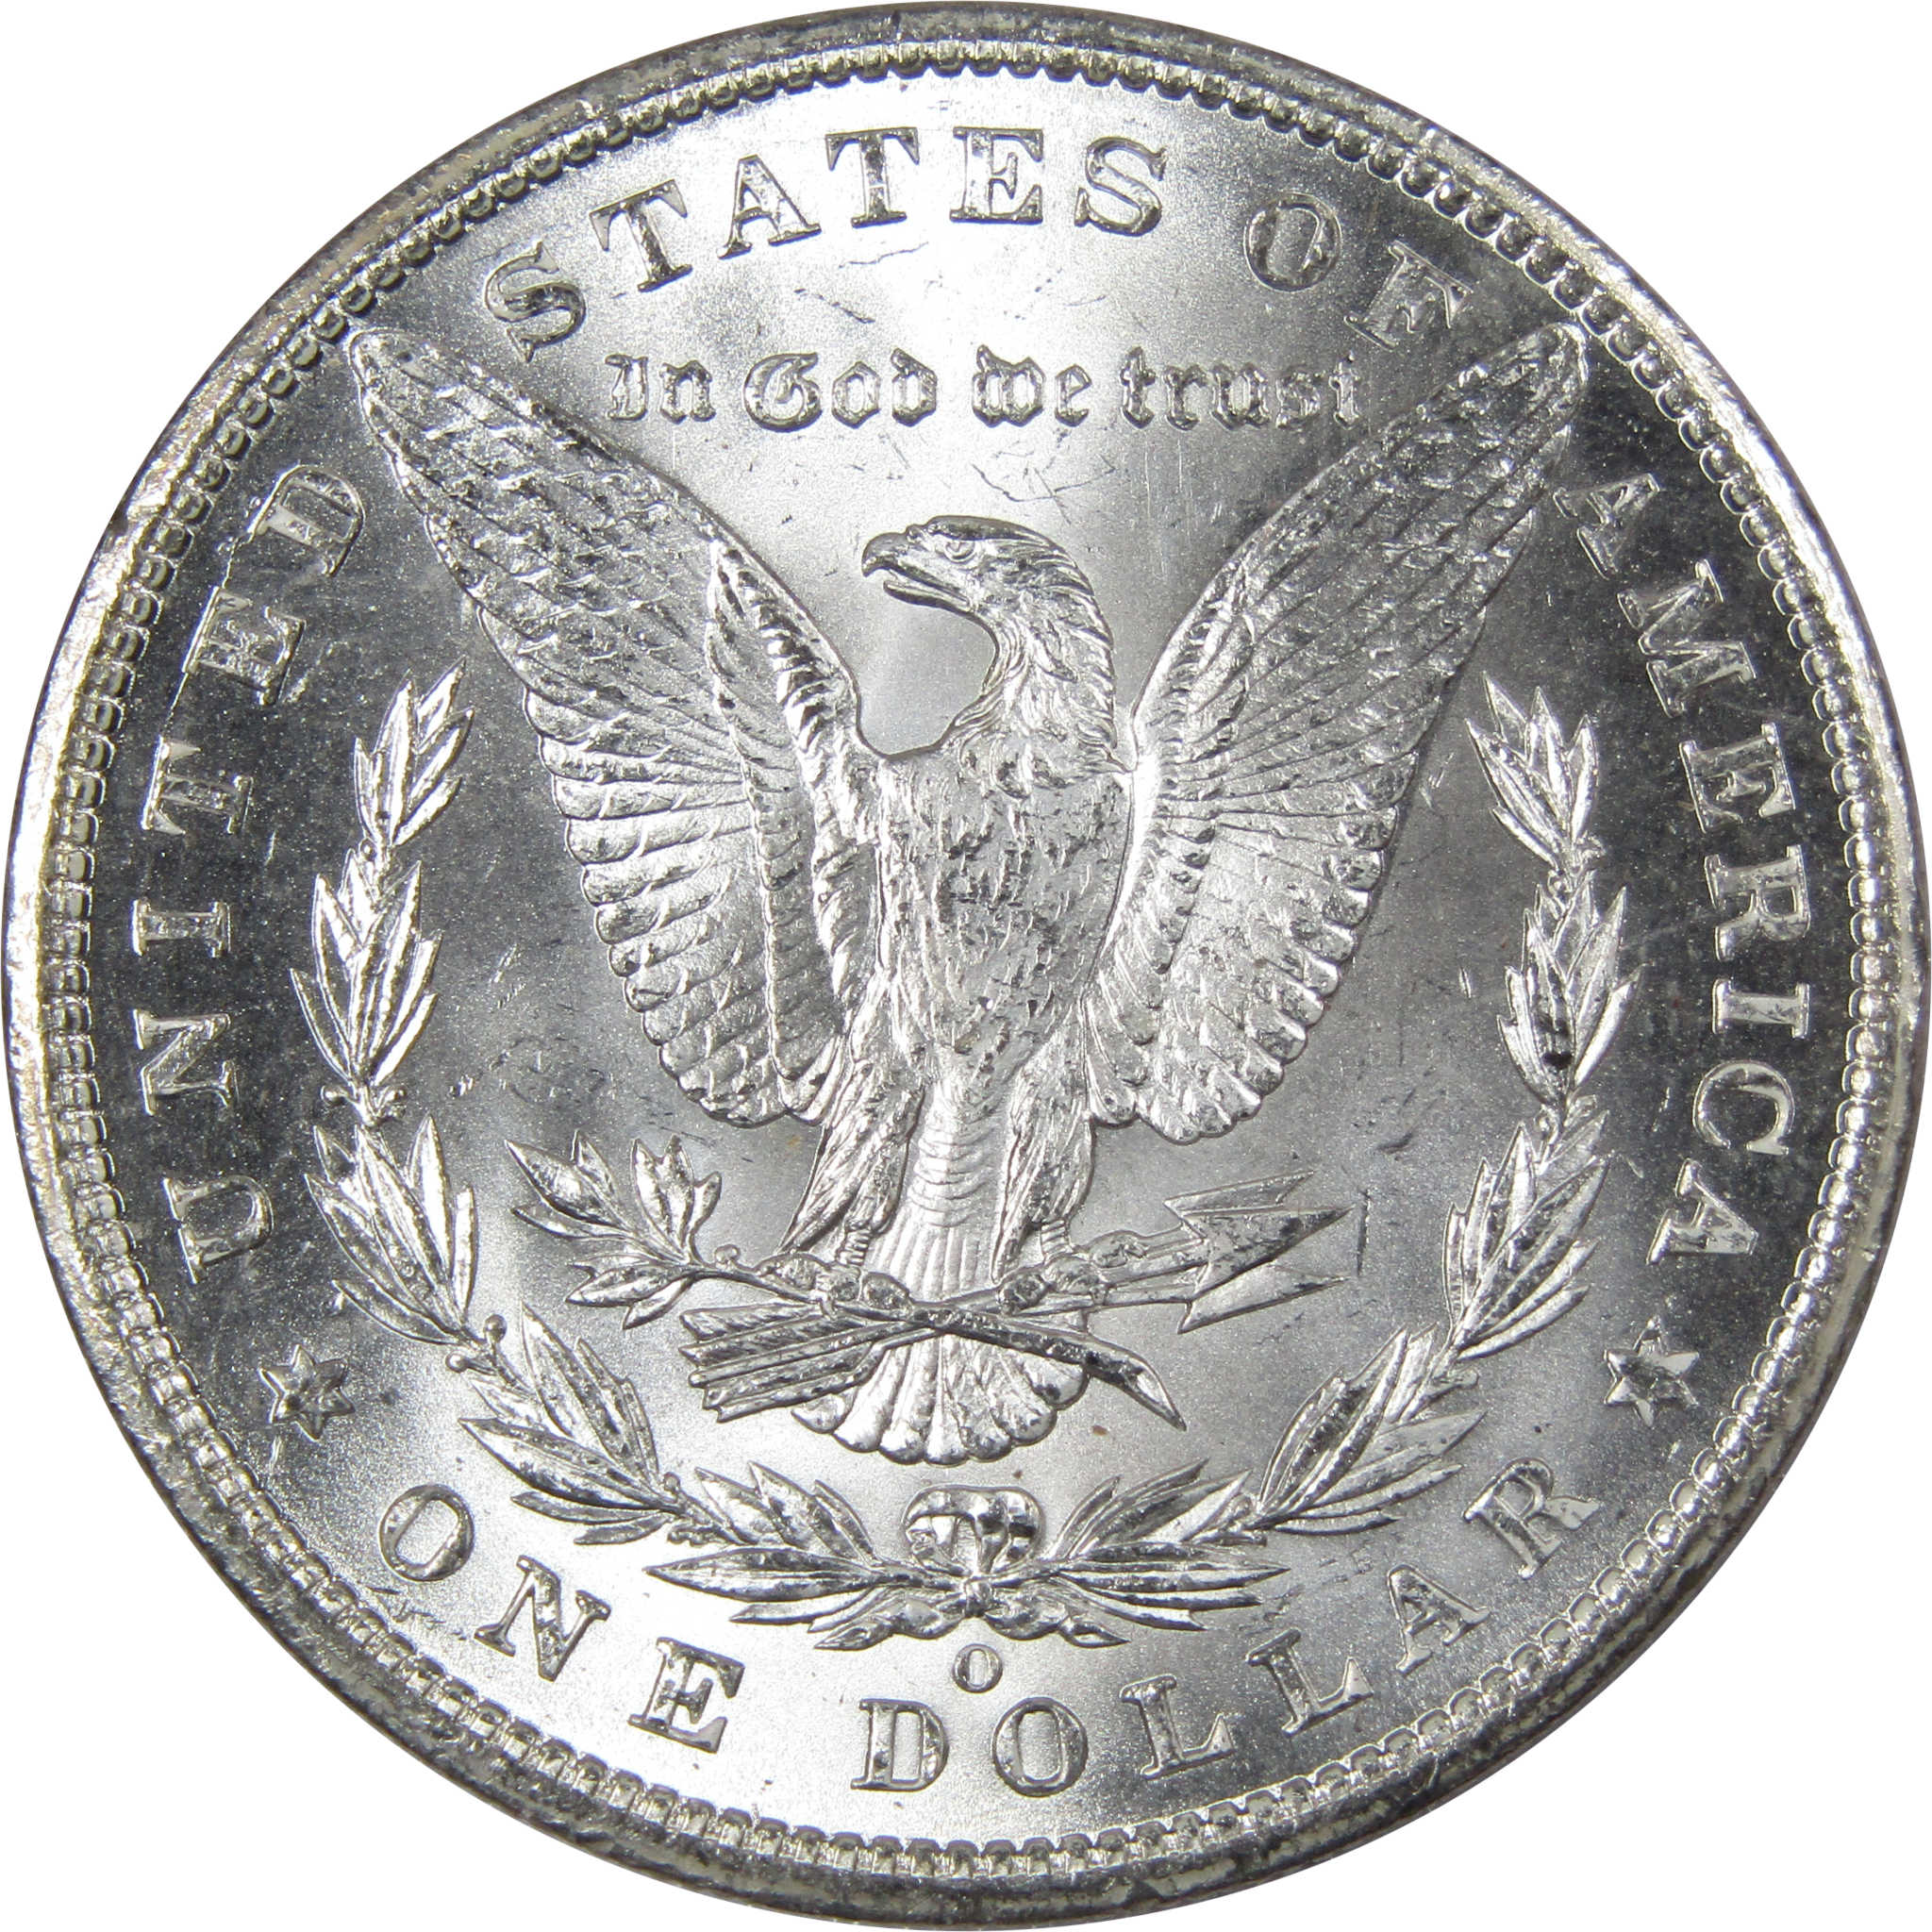 1900 O Morgan Dollar BU Uncirculated Mint State 90% Silver SKU:IPC9743 - Morgan coin - Morgan silver dollar - Morgan silver dollar for sale - Profile Coins &amp; Collectibles